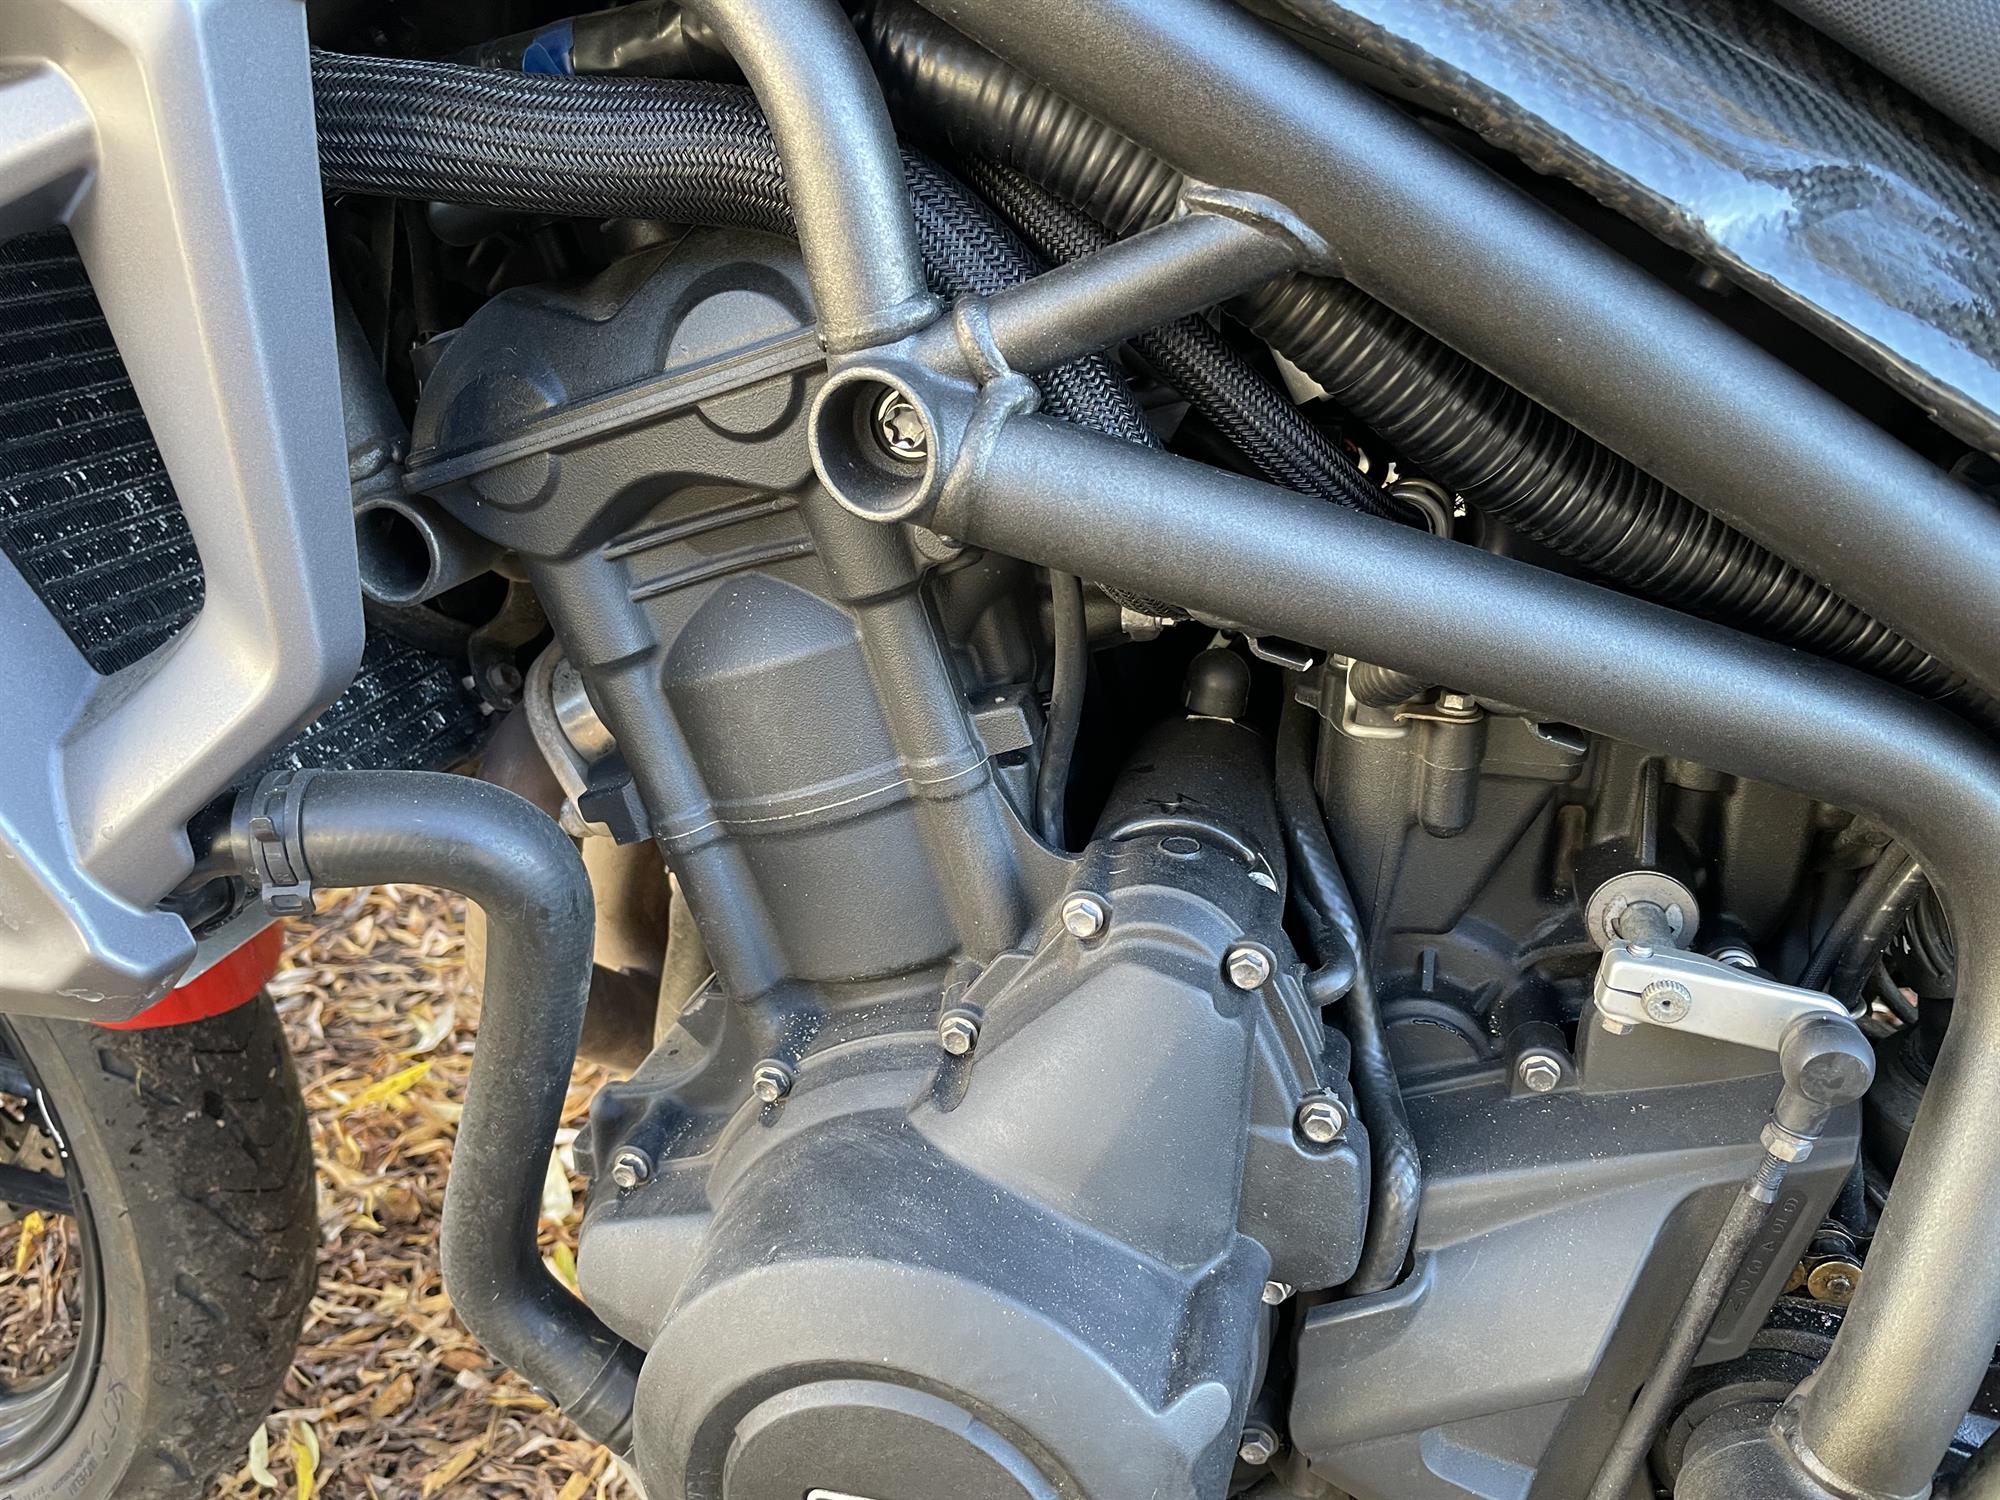 2015 Triumph Tiger 800 XRT 800cc - Image 4 of 10